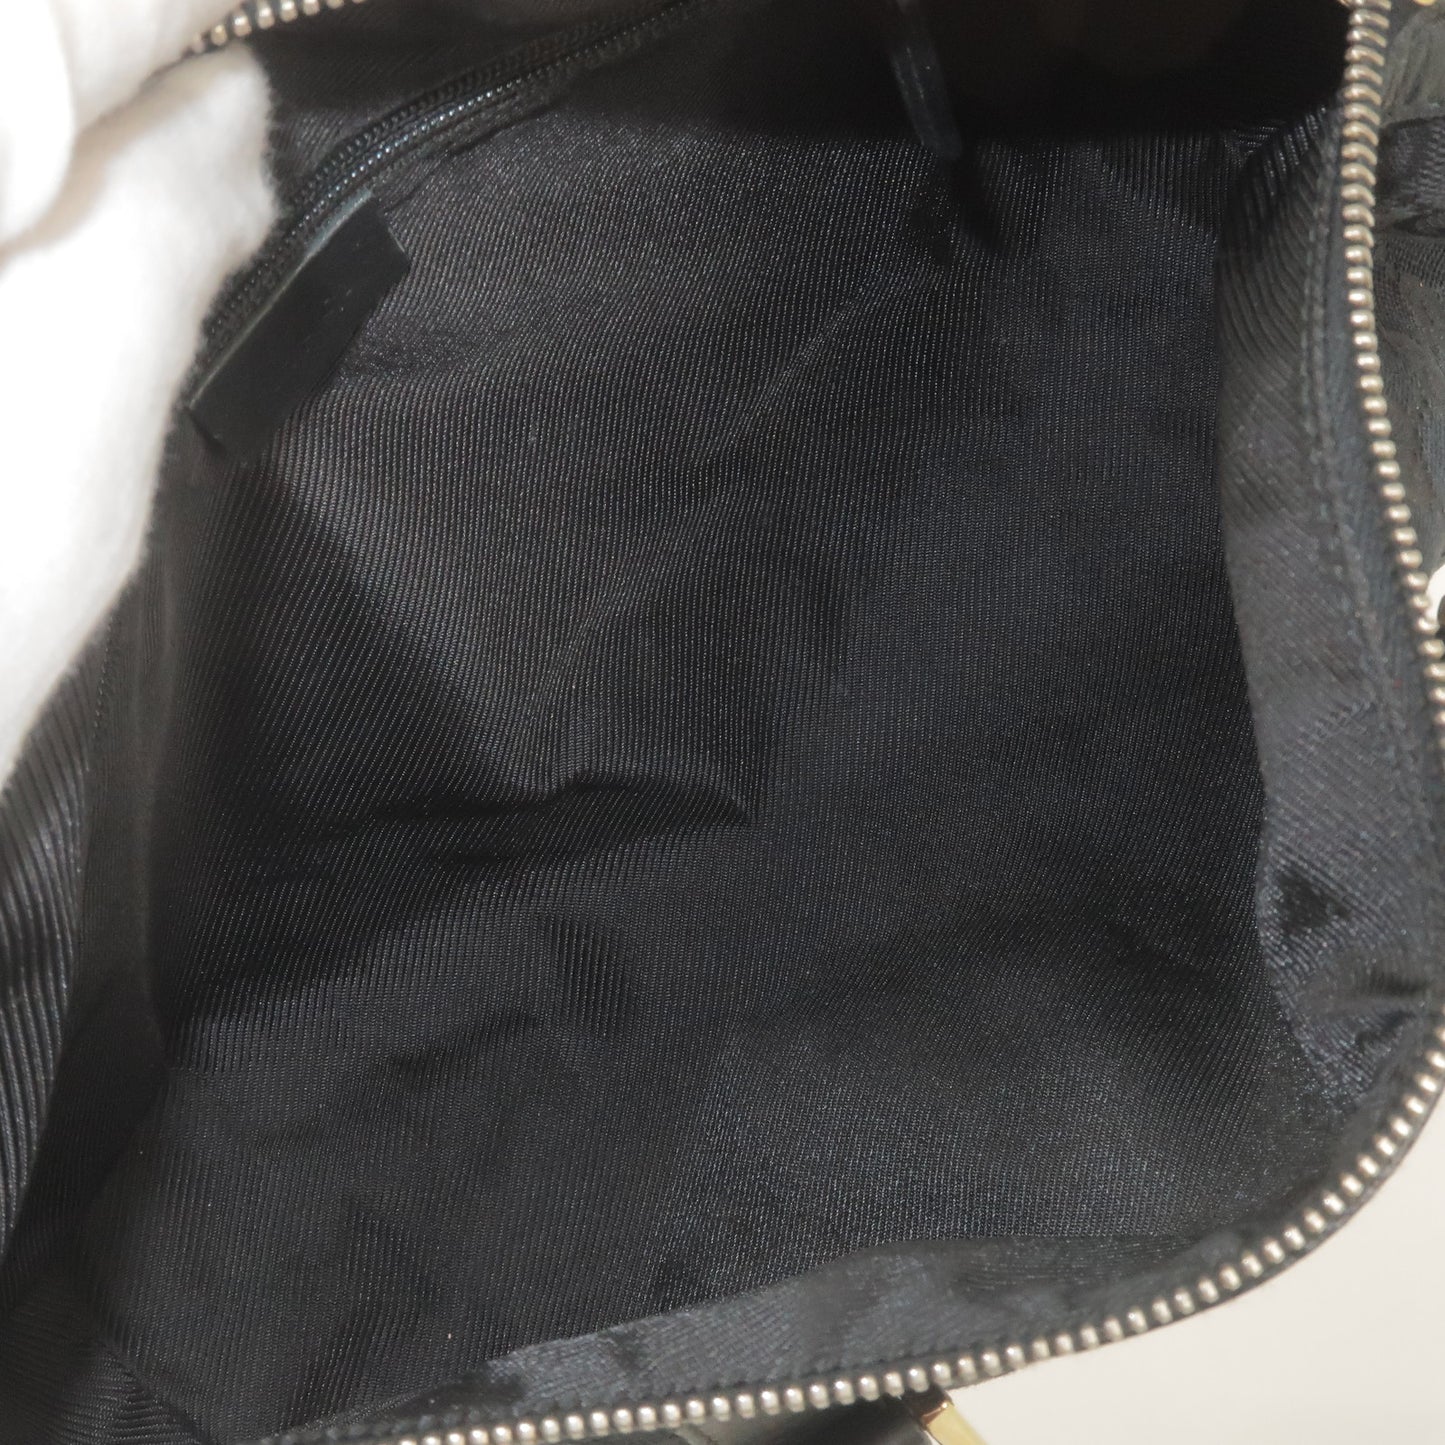 GUCCI GG Canvas Leather Boston Bag Hand Bag Black 000.0851